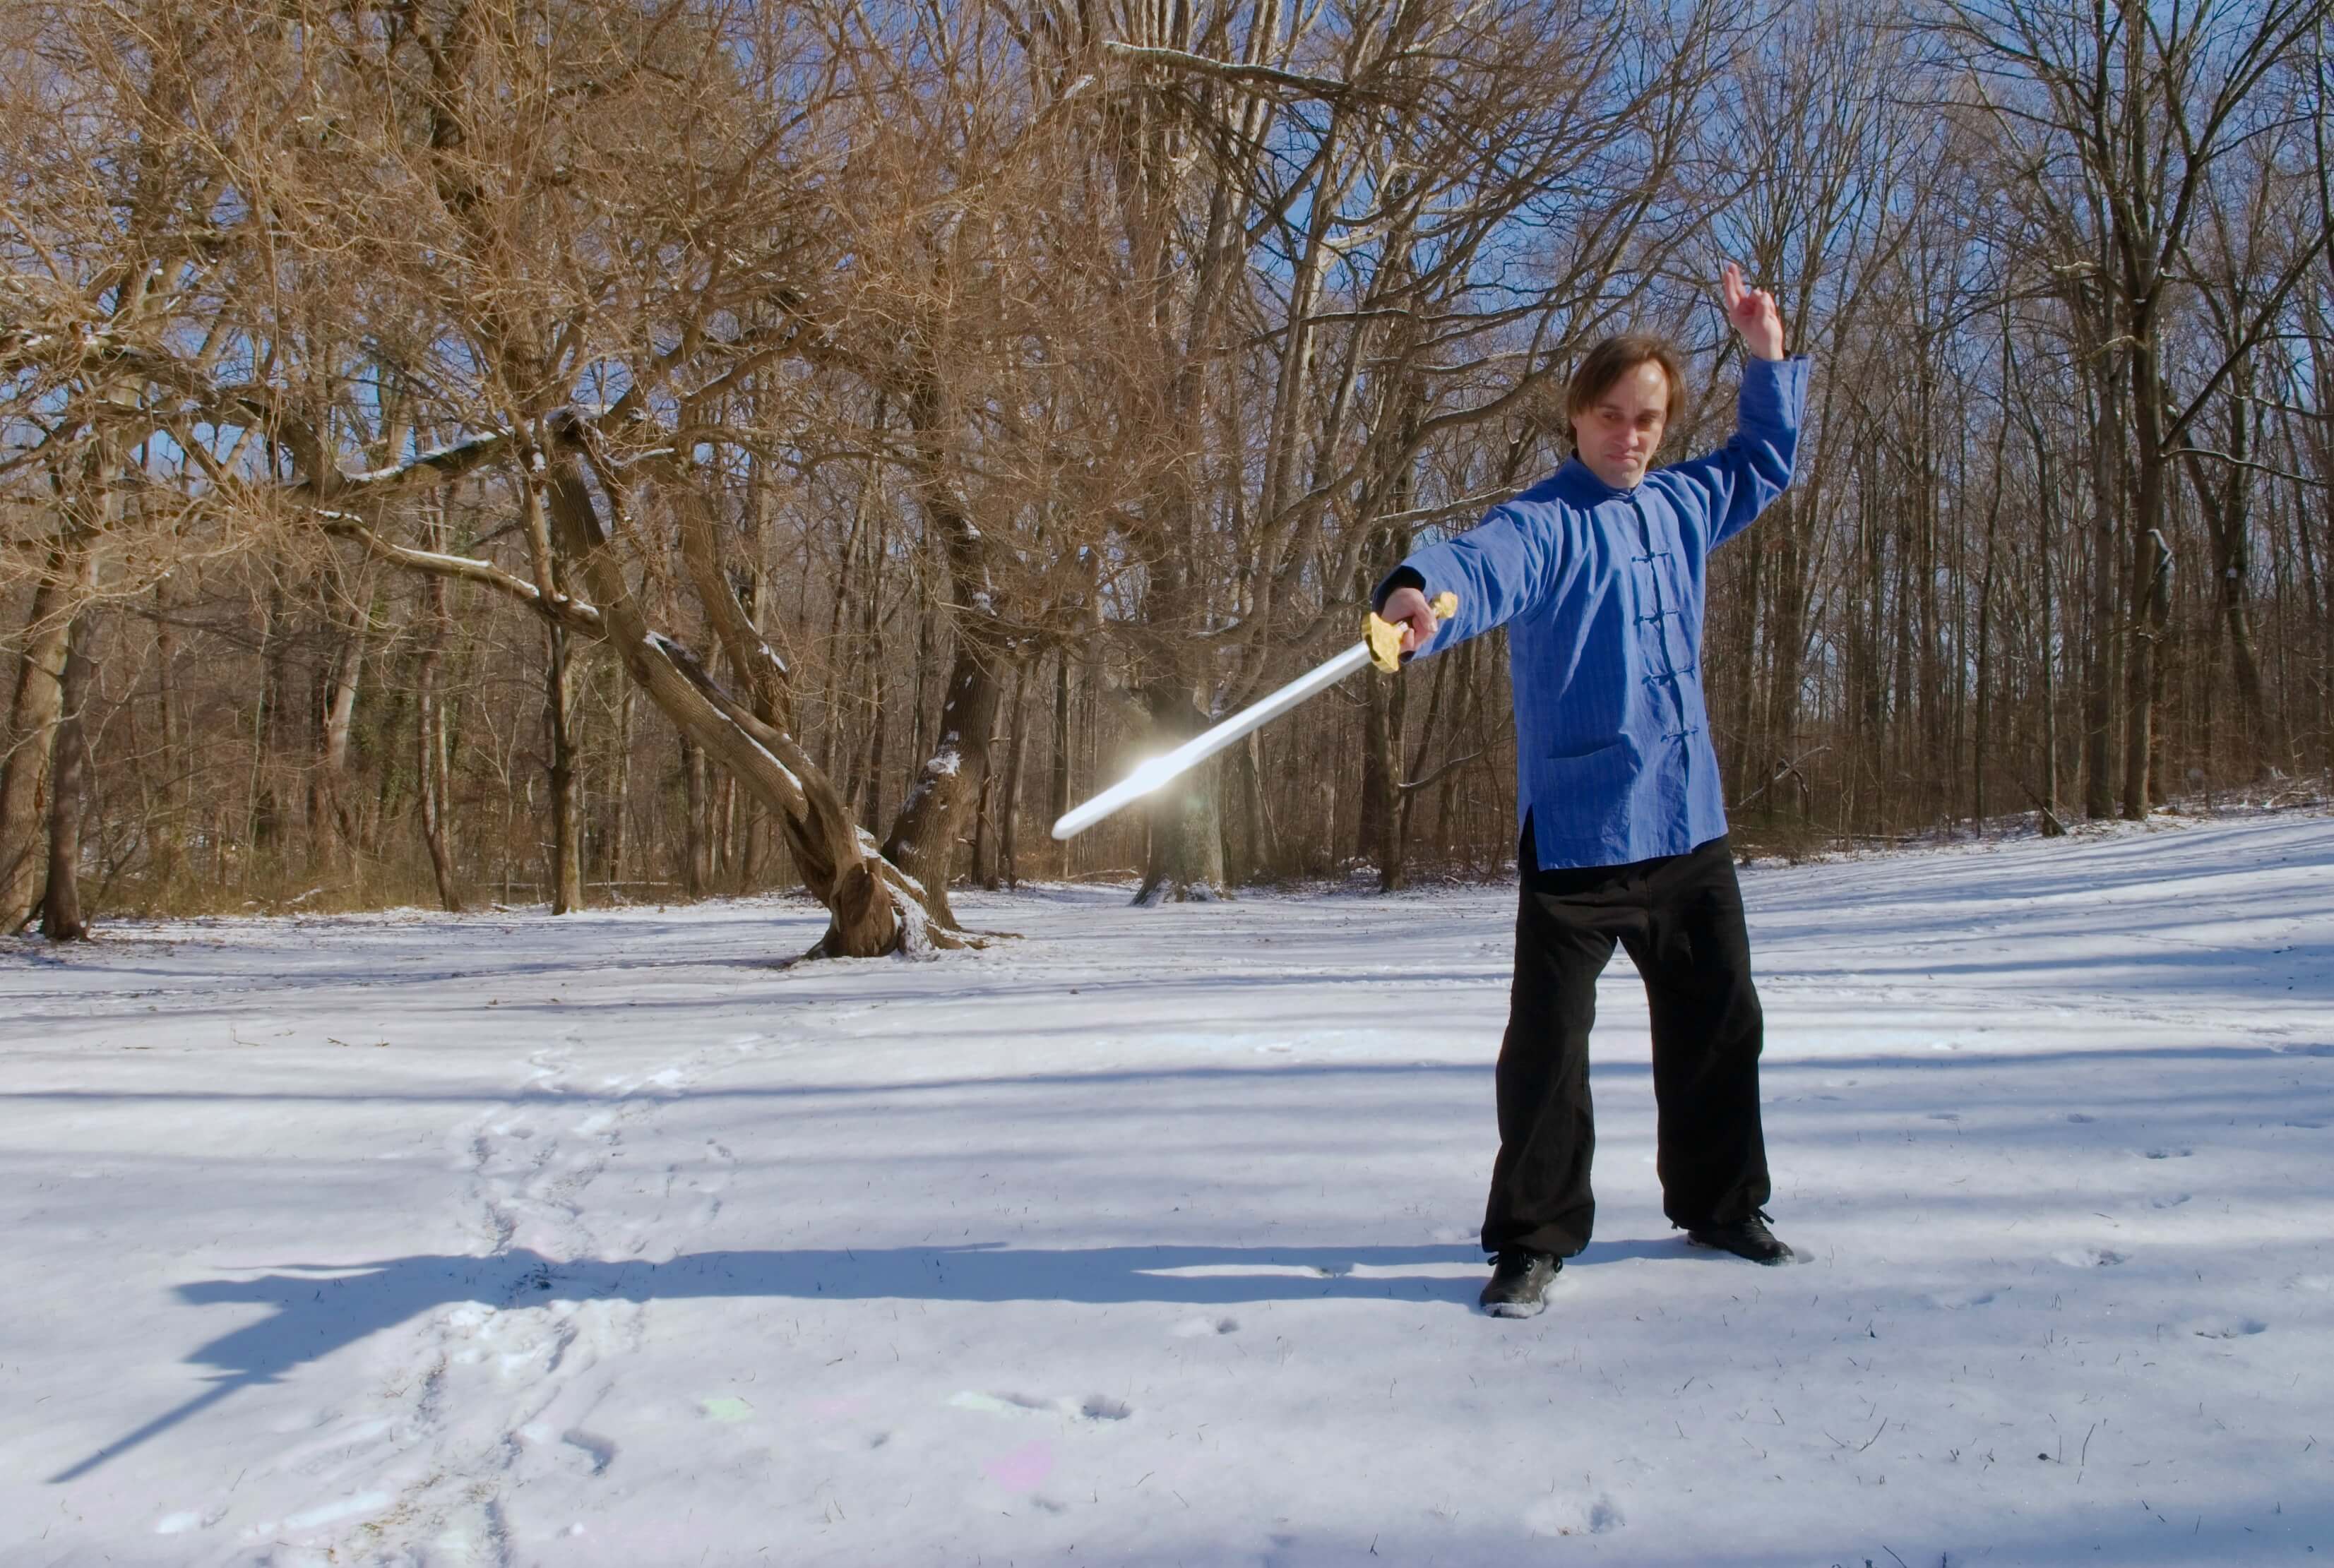 Scott M. Rodell - Chinese Swordmanship in the snow